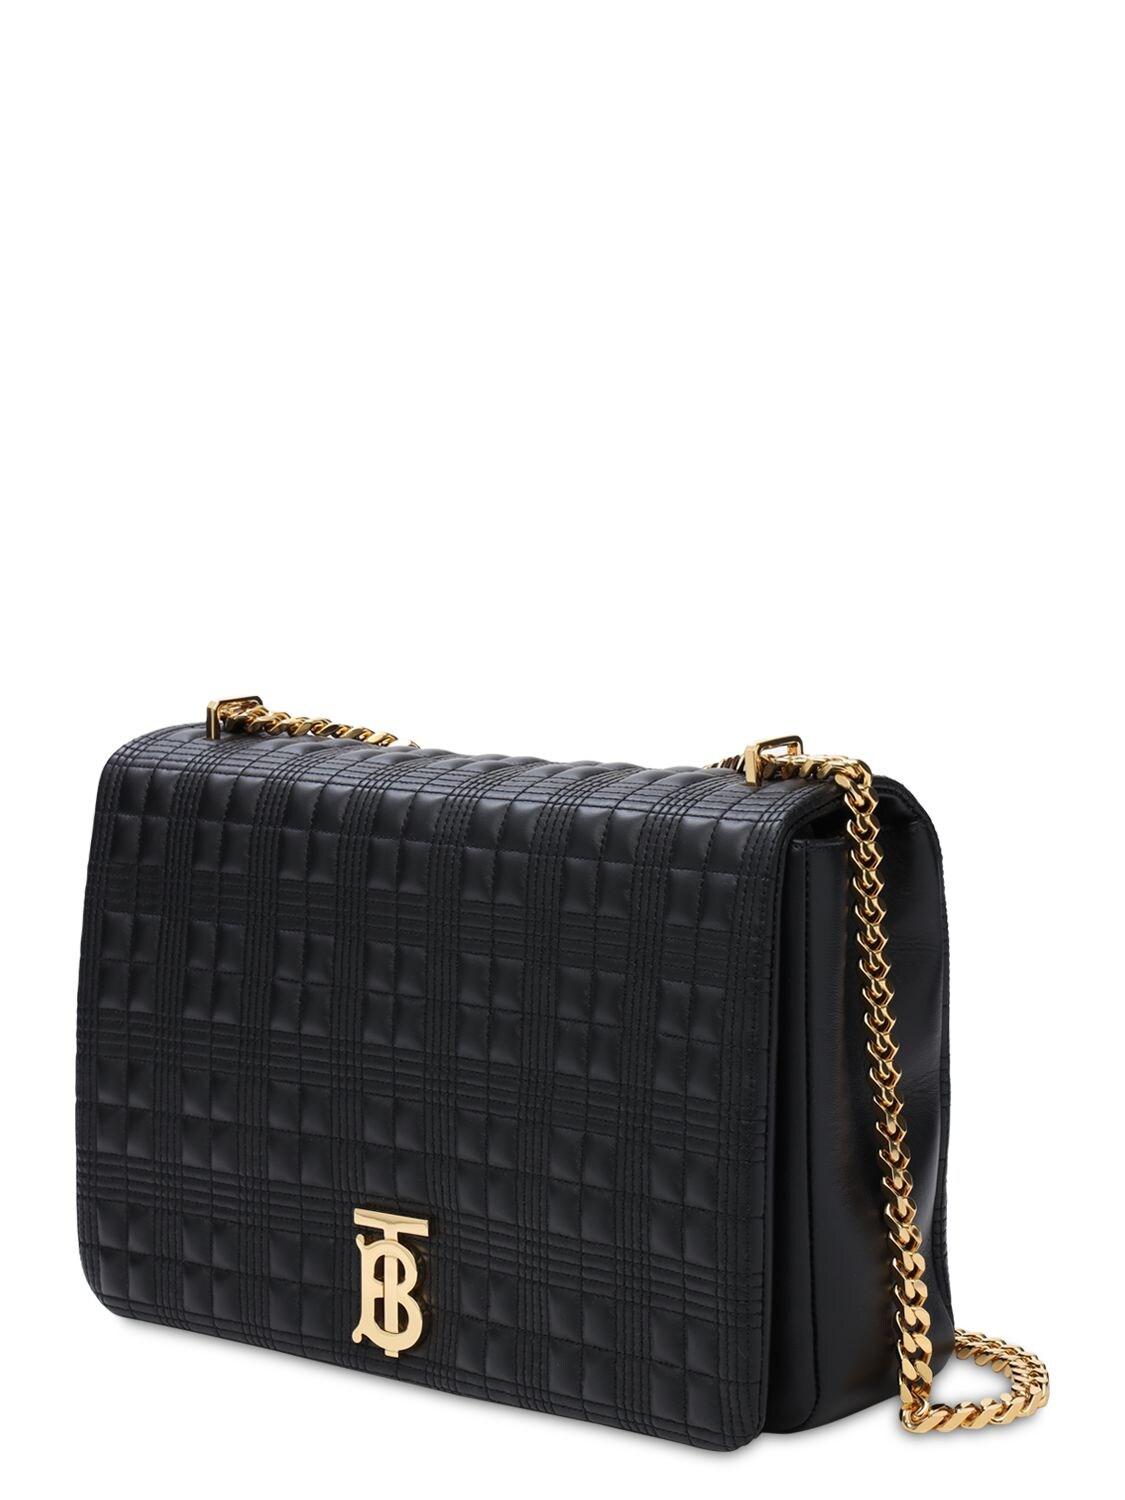 Burberry Xl Lola Leather Shoulder Bag in Black | Lyst